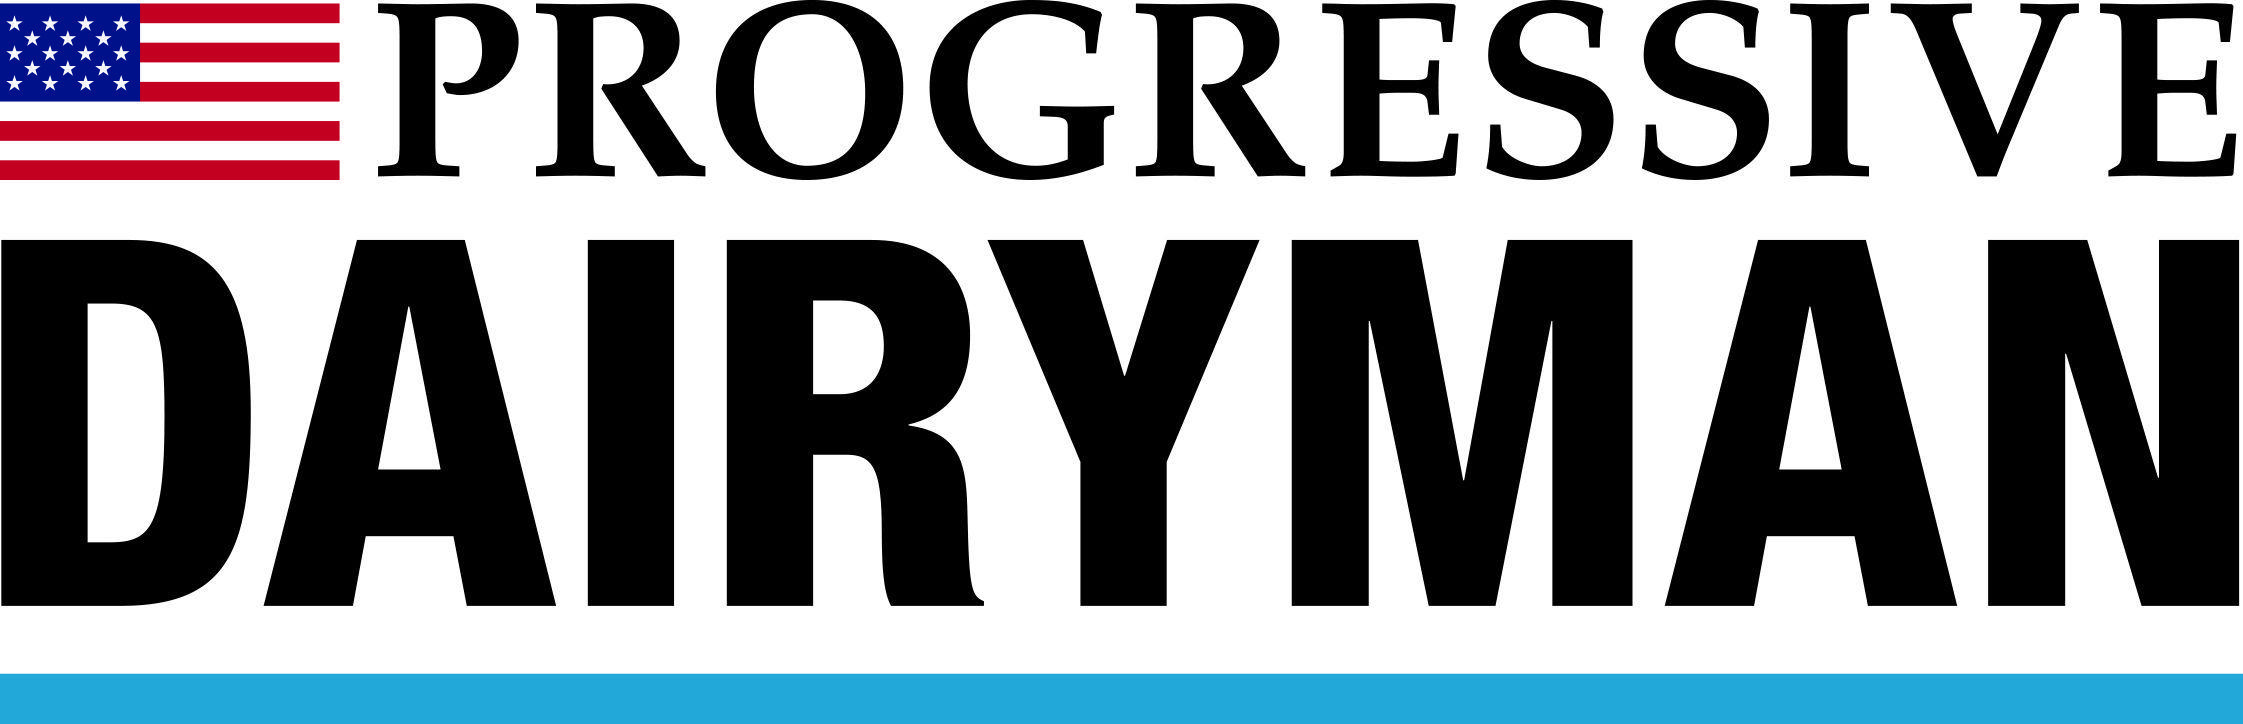 Progressive Logo - Progressive Publishing Branding - Progressive Dairyman